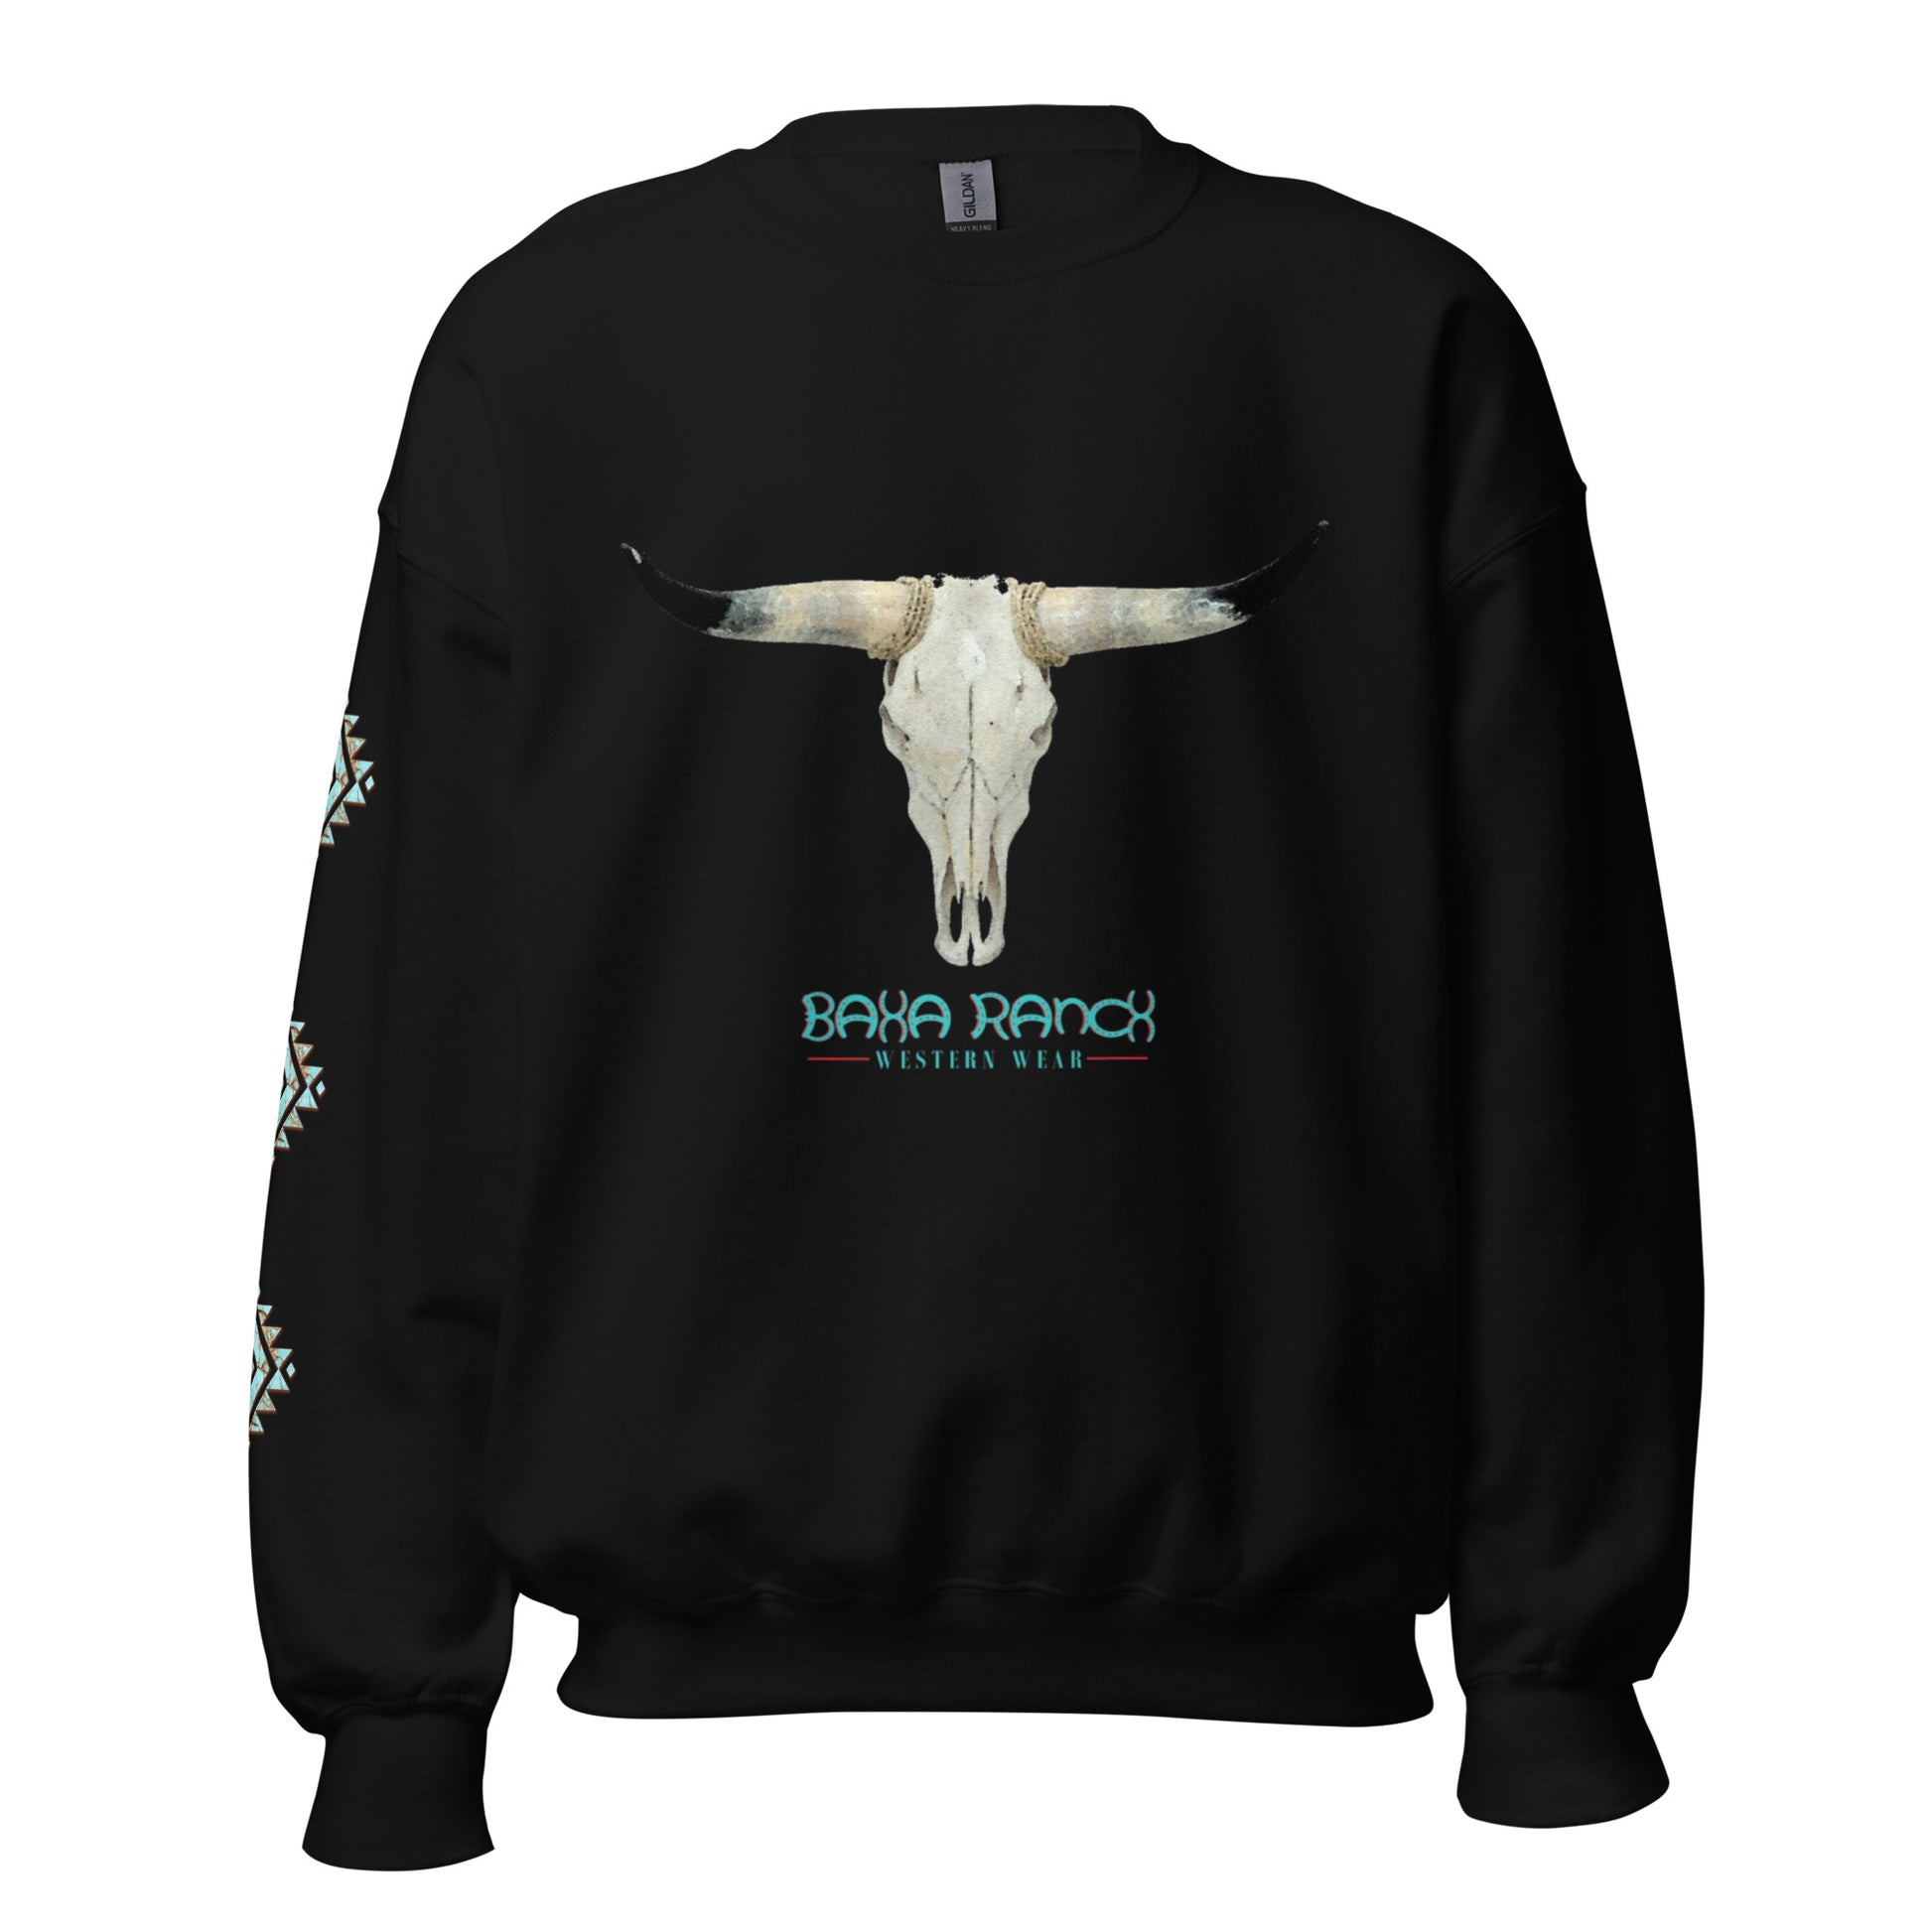 White Bull Skull Unisex Sweatshirt - bull, bull skull, bullskull, sweat shirt, sweatshirt, unisex, western -  - Baha Ranch Western Wear